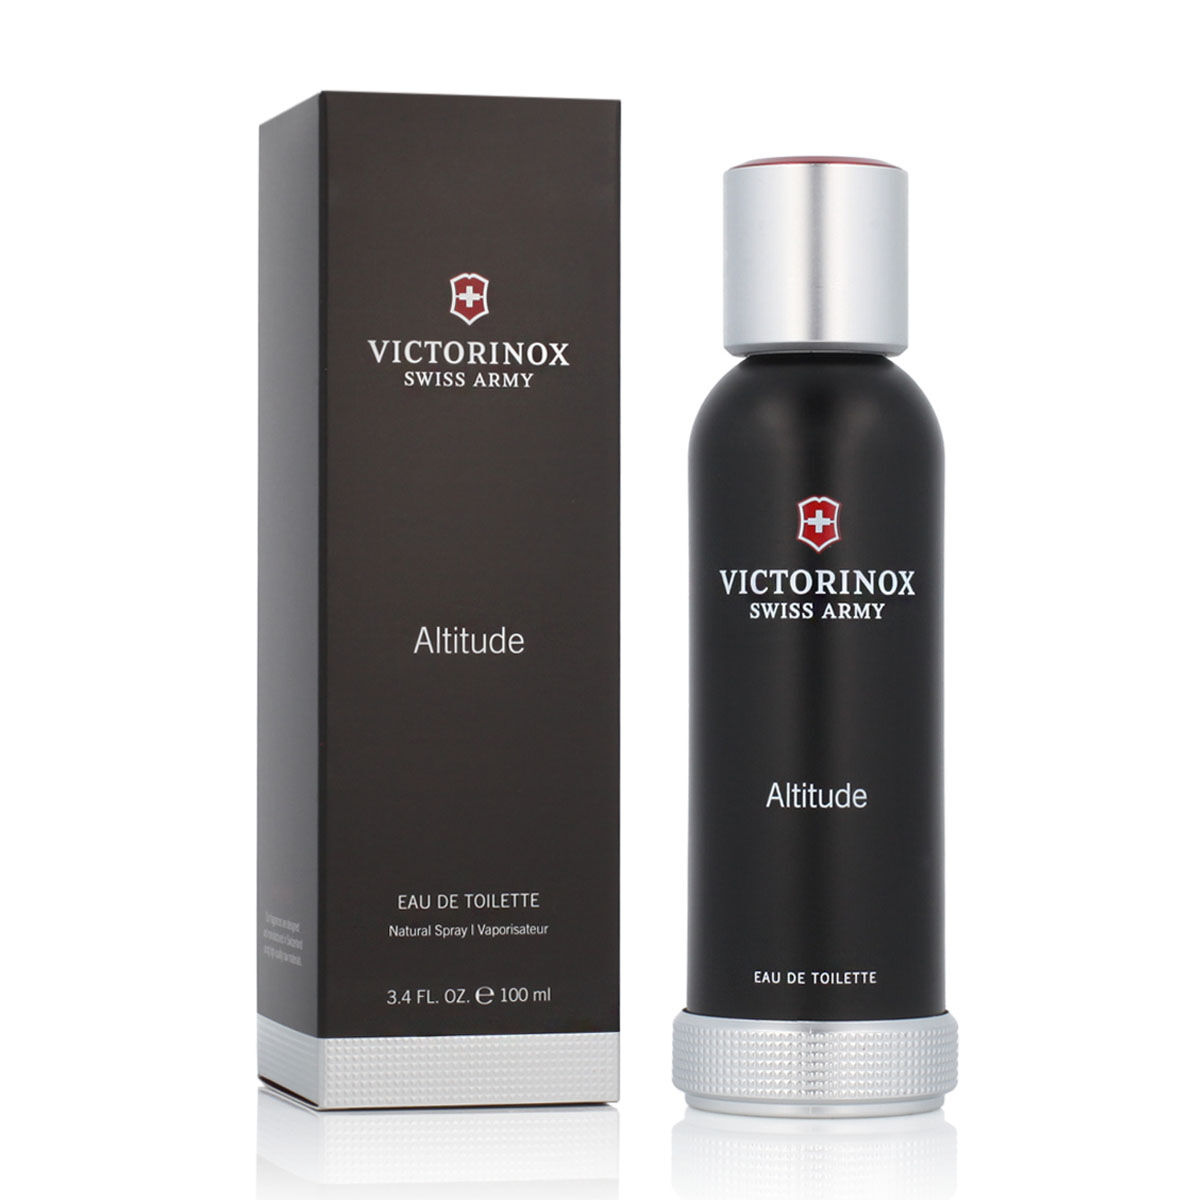 Parfum Homme Victorinox EDT 100 ml Altitude For Men